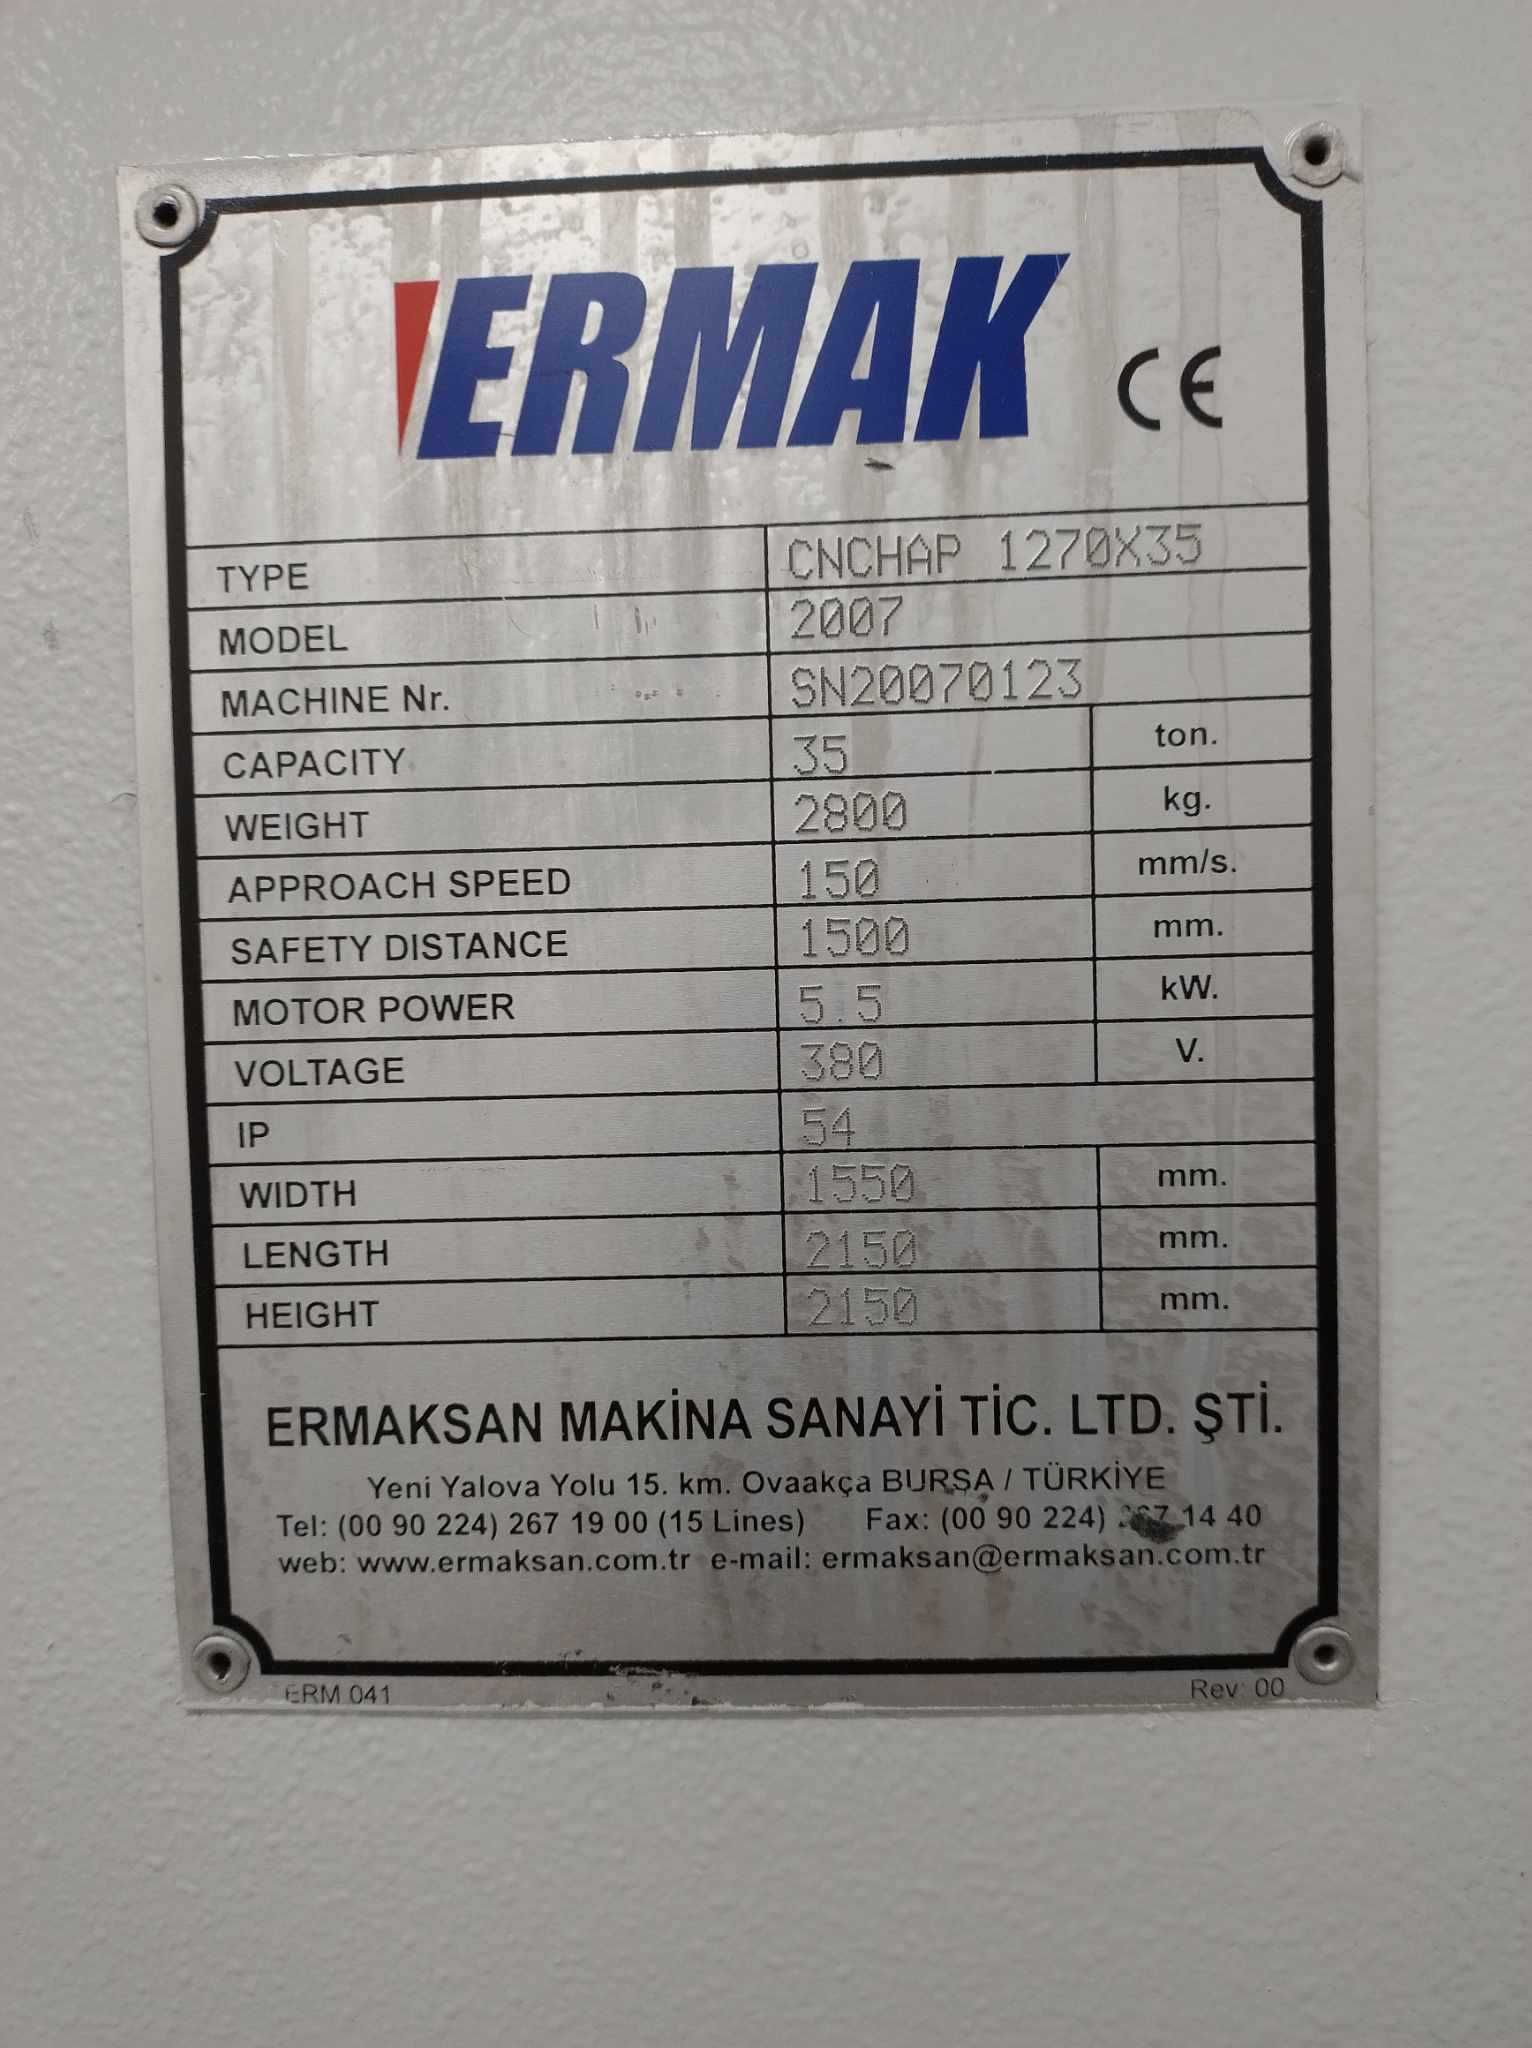 Prasa krawędziowa ERMAK CNC HAP 1270x35T